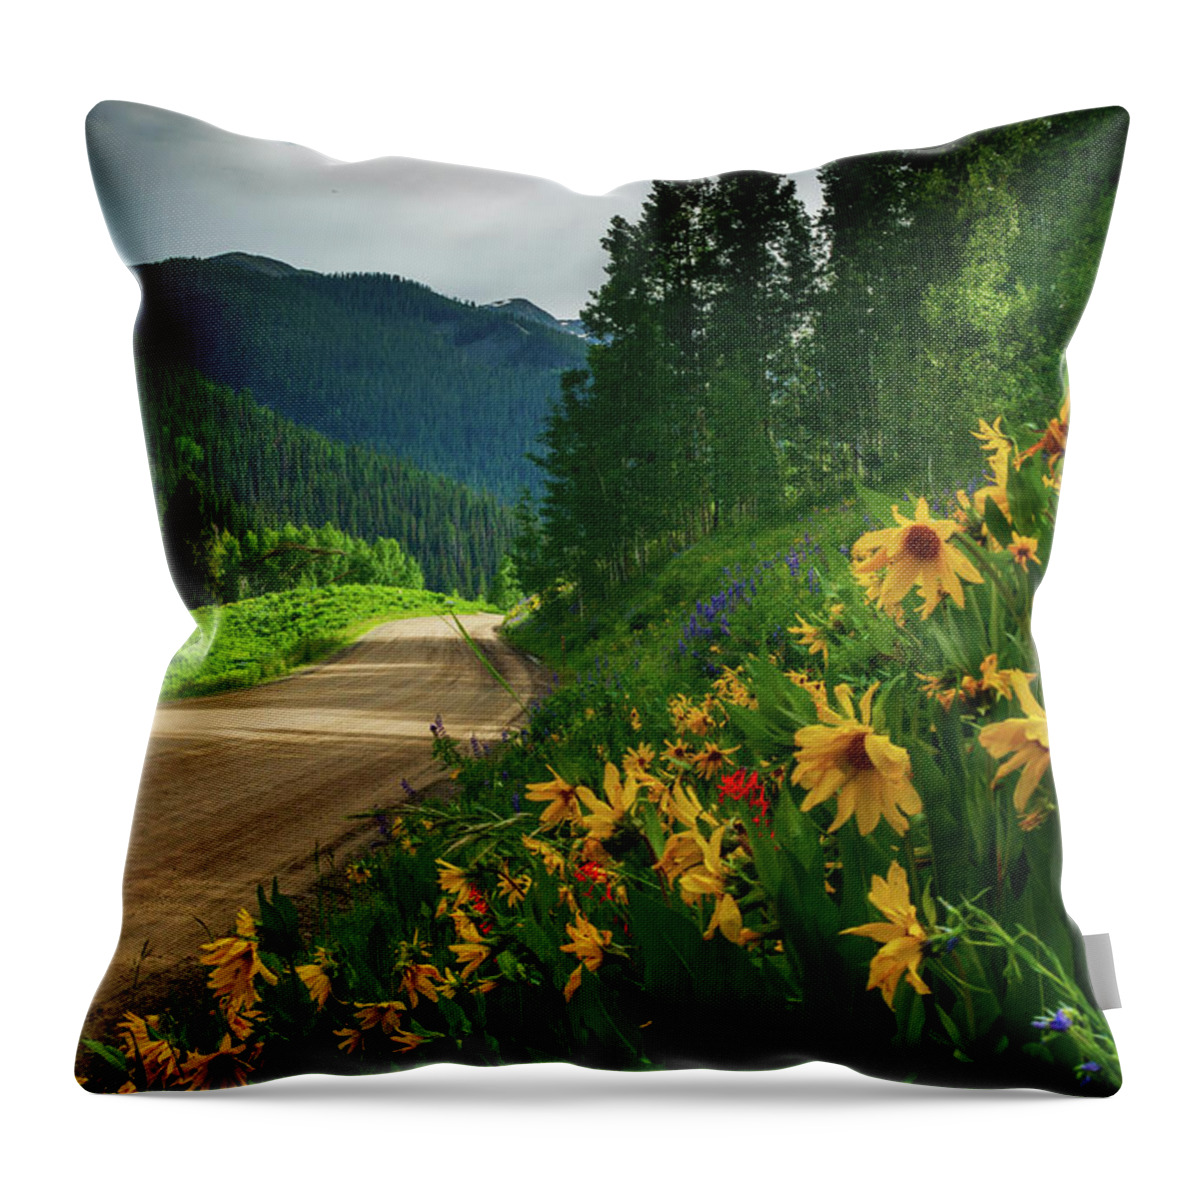 America Throw Pillow featuring the photograph Colorado Wildflowers by John De Bord